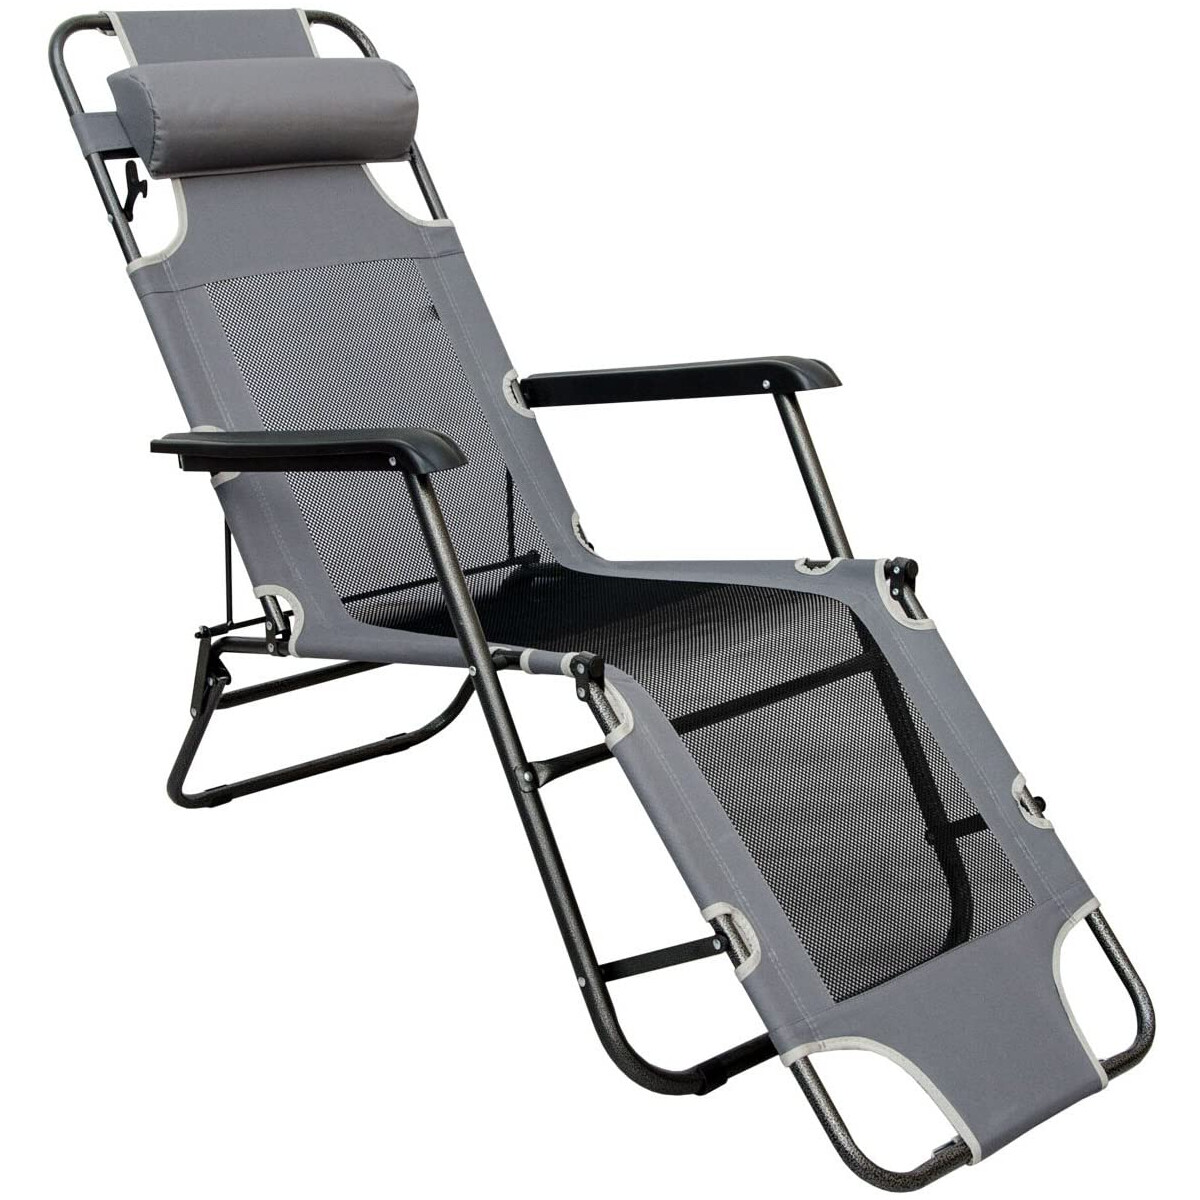 Campingstuhl Liegestuhl Grau mit Netzbezug 178x60 cm